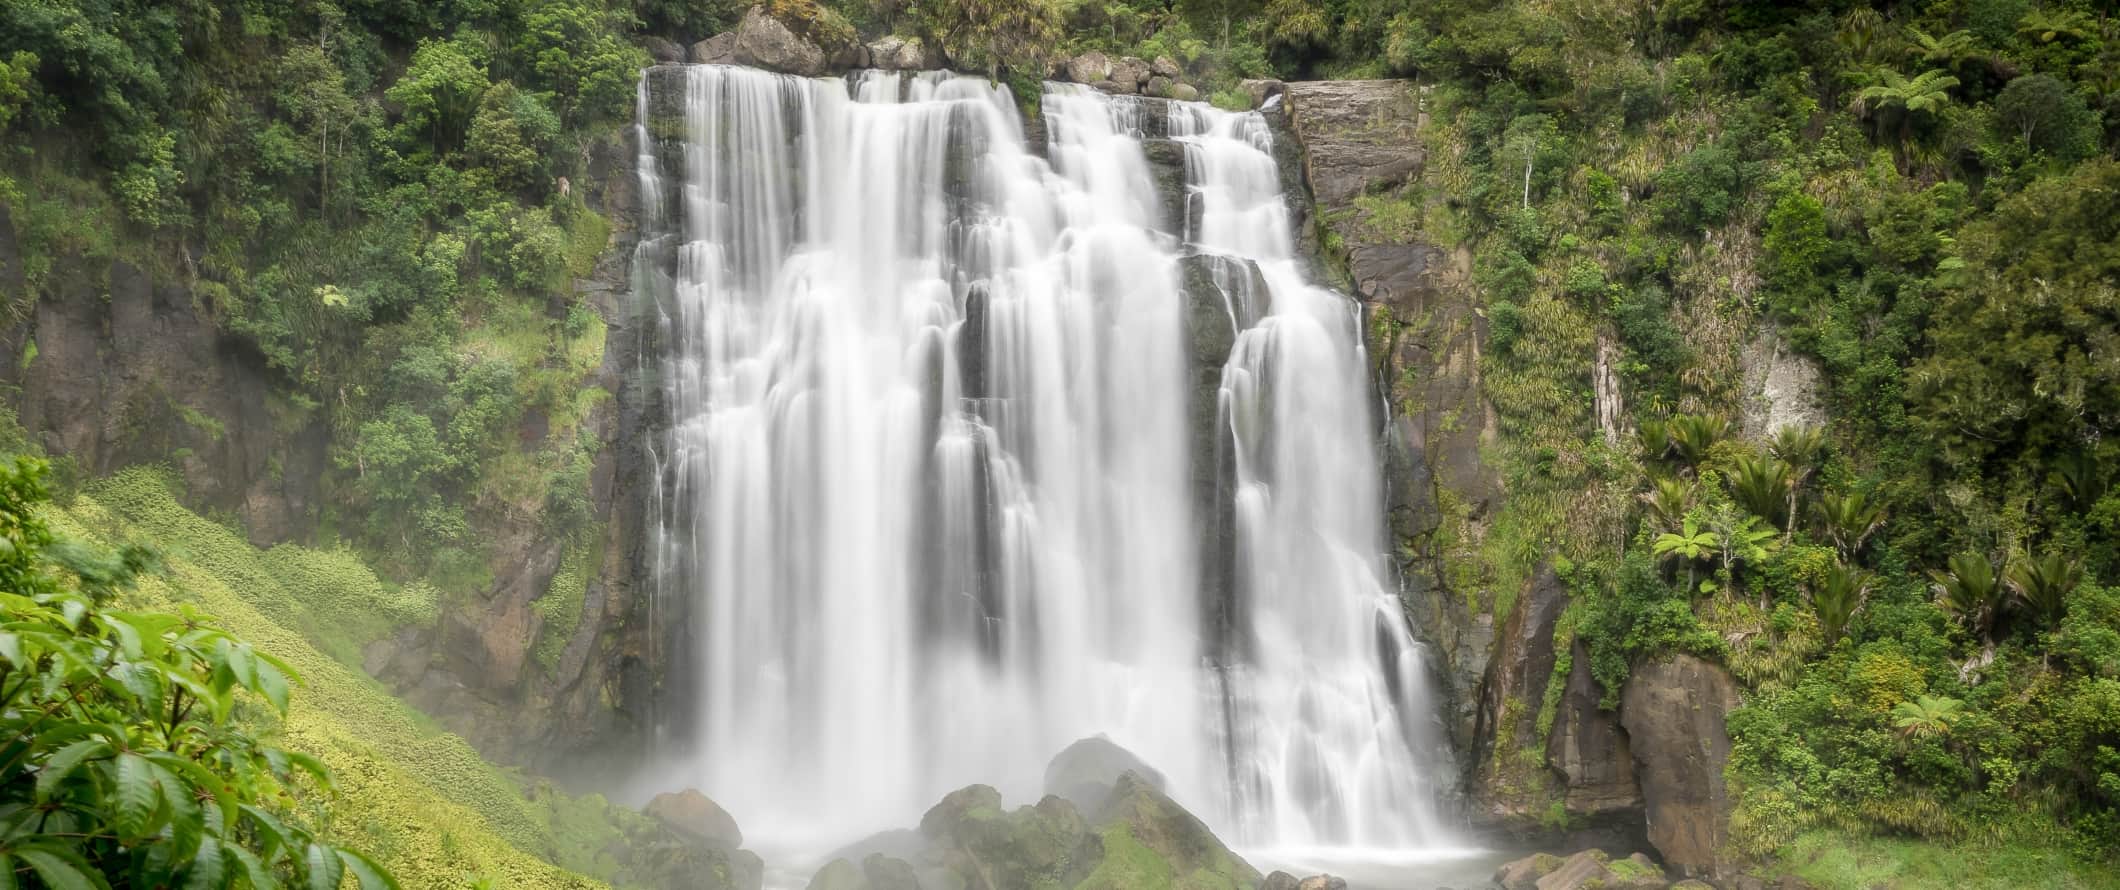 Marokopa falls, a waterfall in Waitomo, New Zealand.